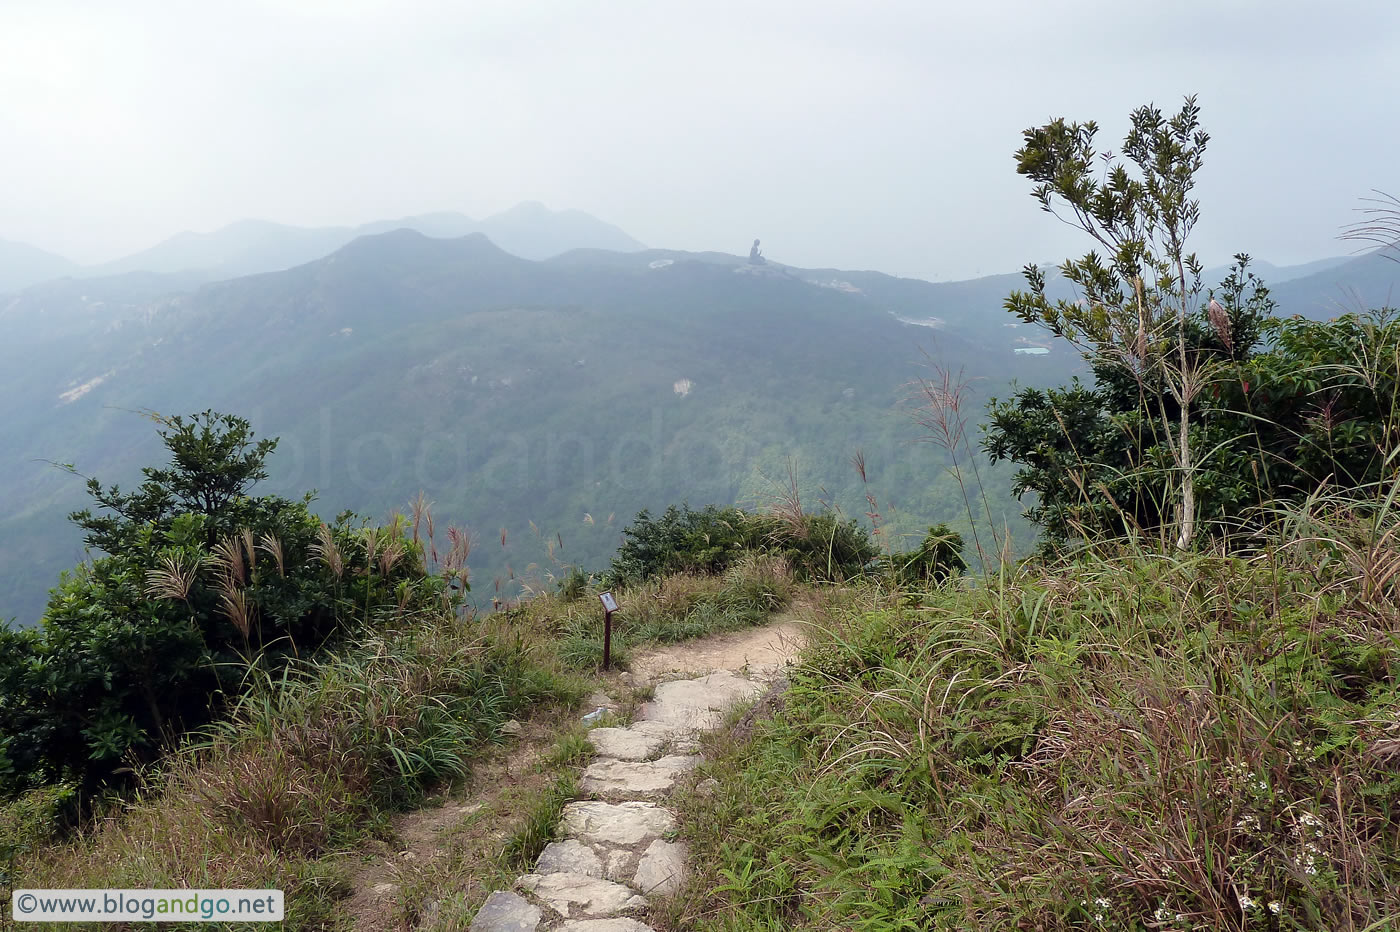 Lantau Trail - Big Buddha in view